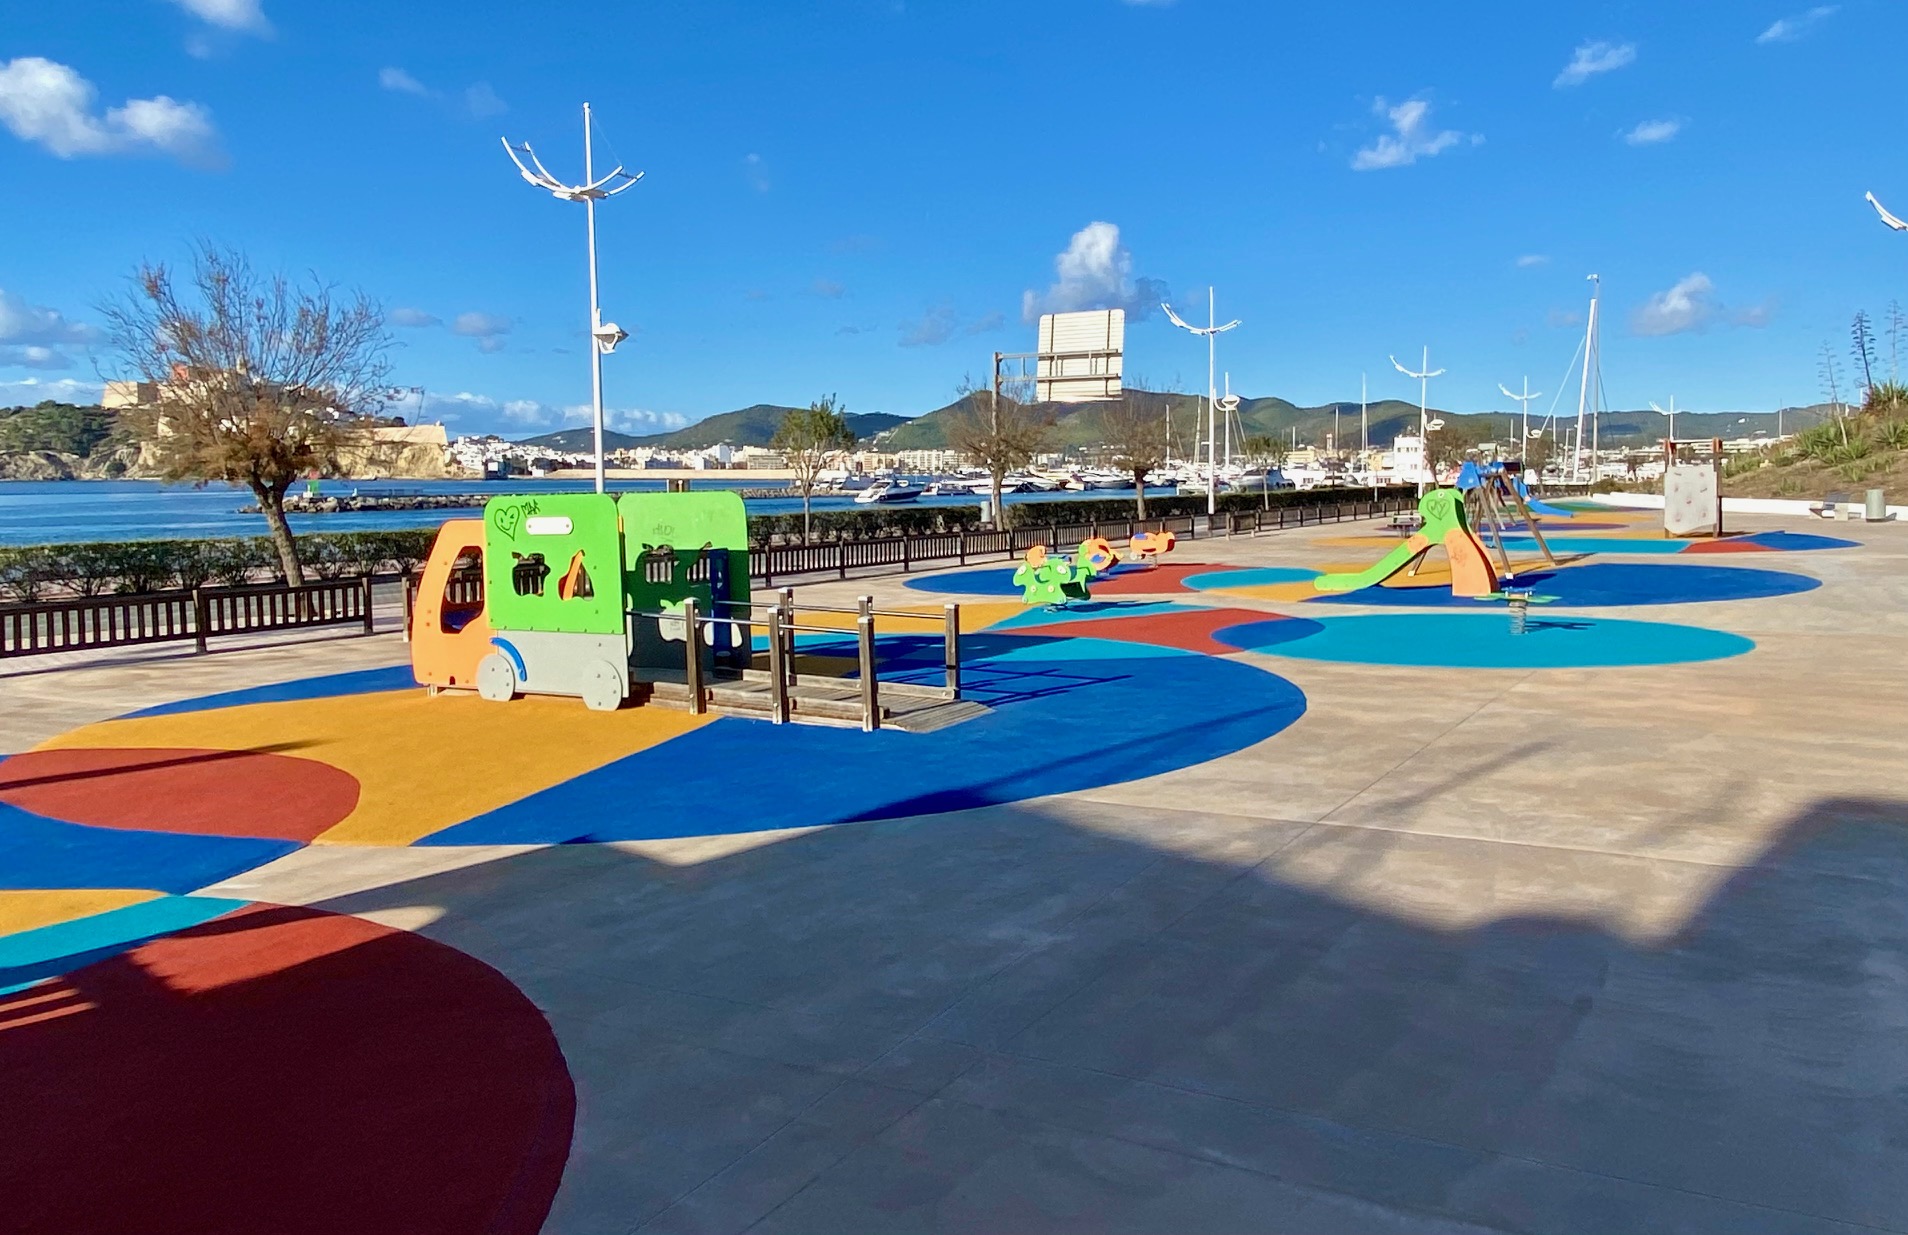 The APB repaves the children’s playground at Botafoc in the Port of Ibiza